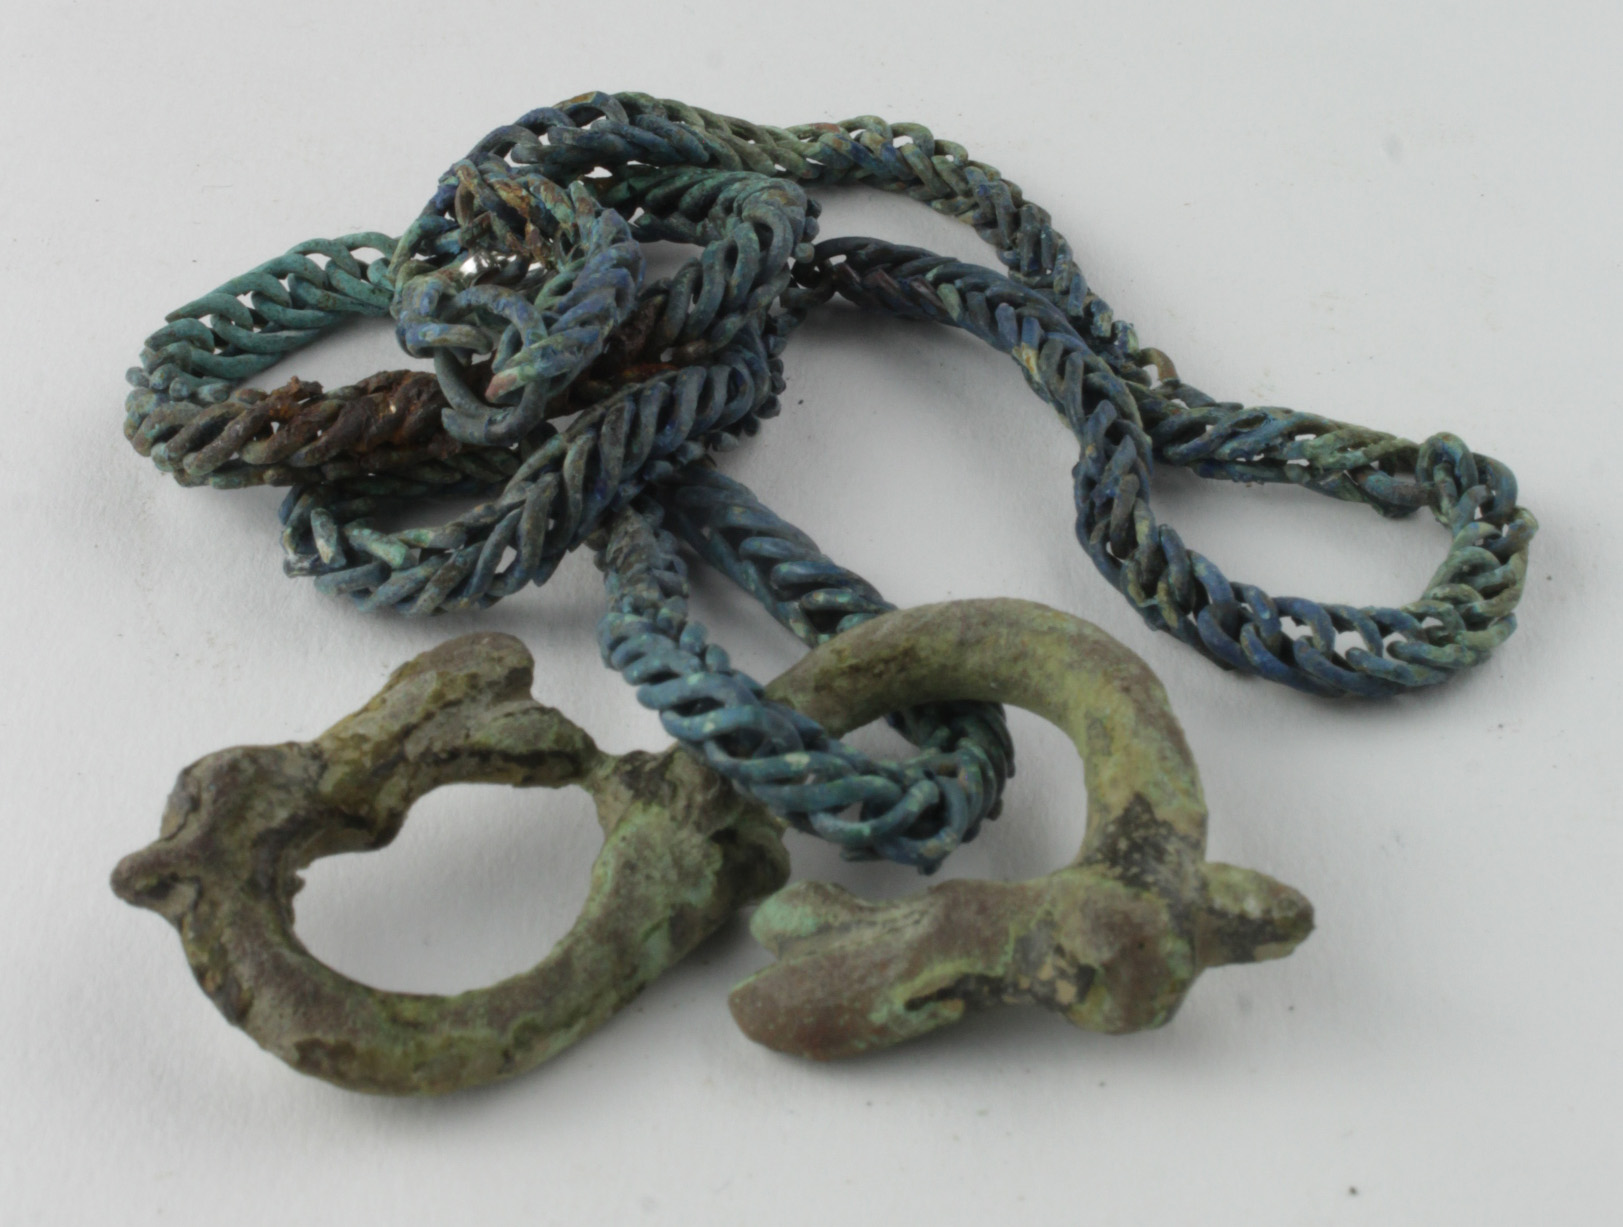 Viking Dragon Pendant on Original Chain, ca. 900 AD, cast amulet shaped as Dragon, possibly fafnir